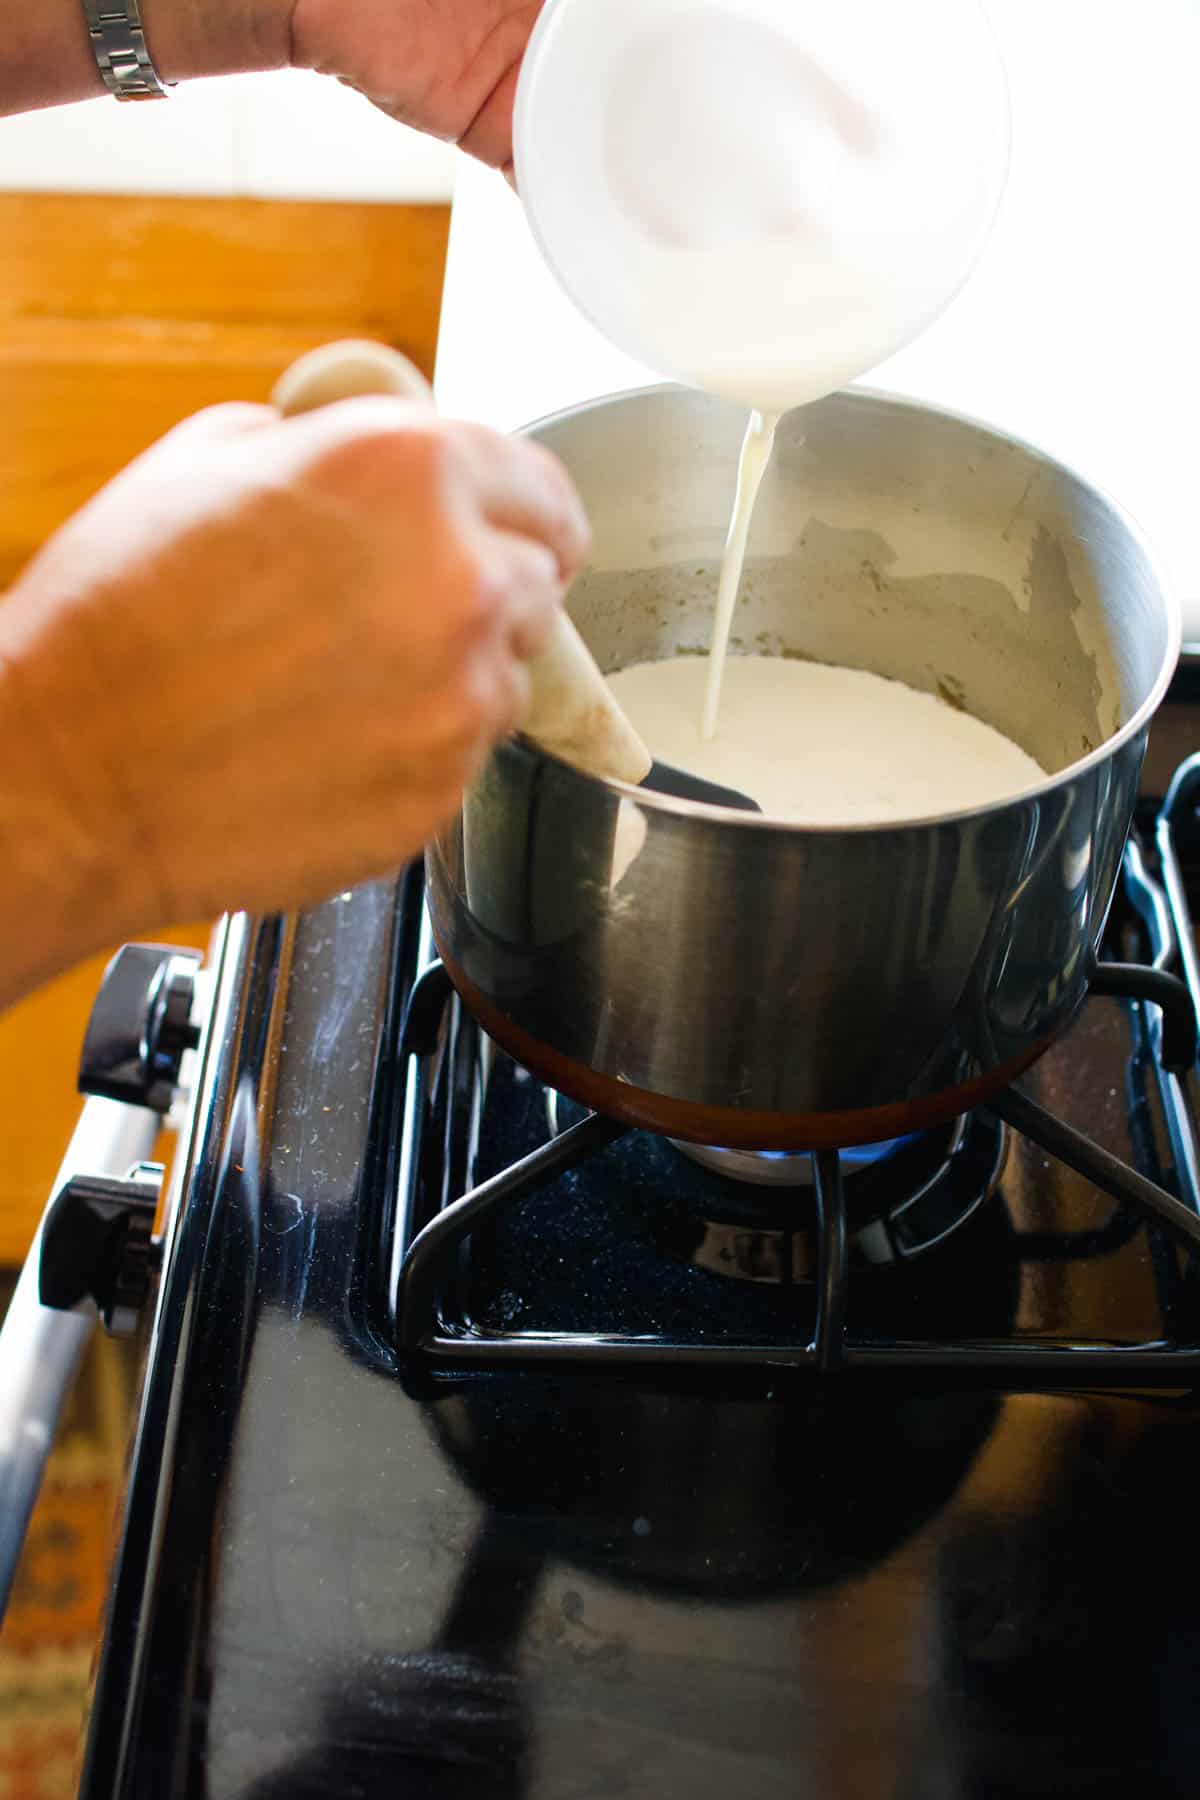 Woman adding cream to a saucepan on the stove.